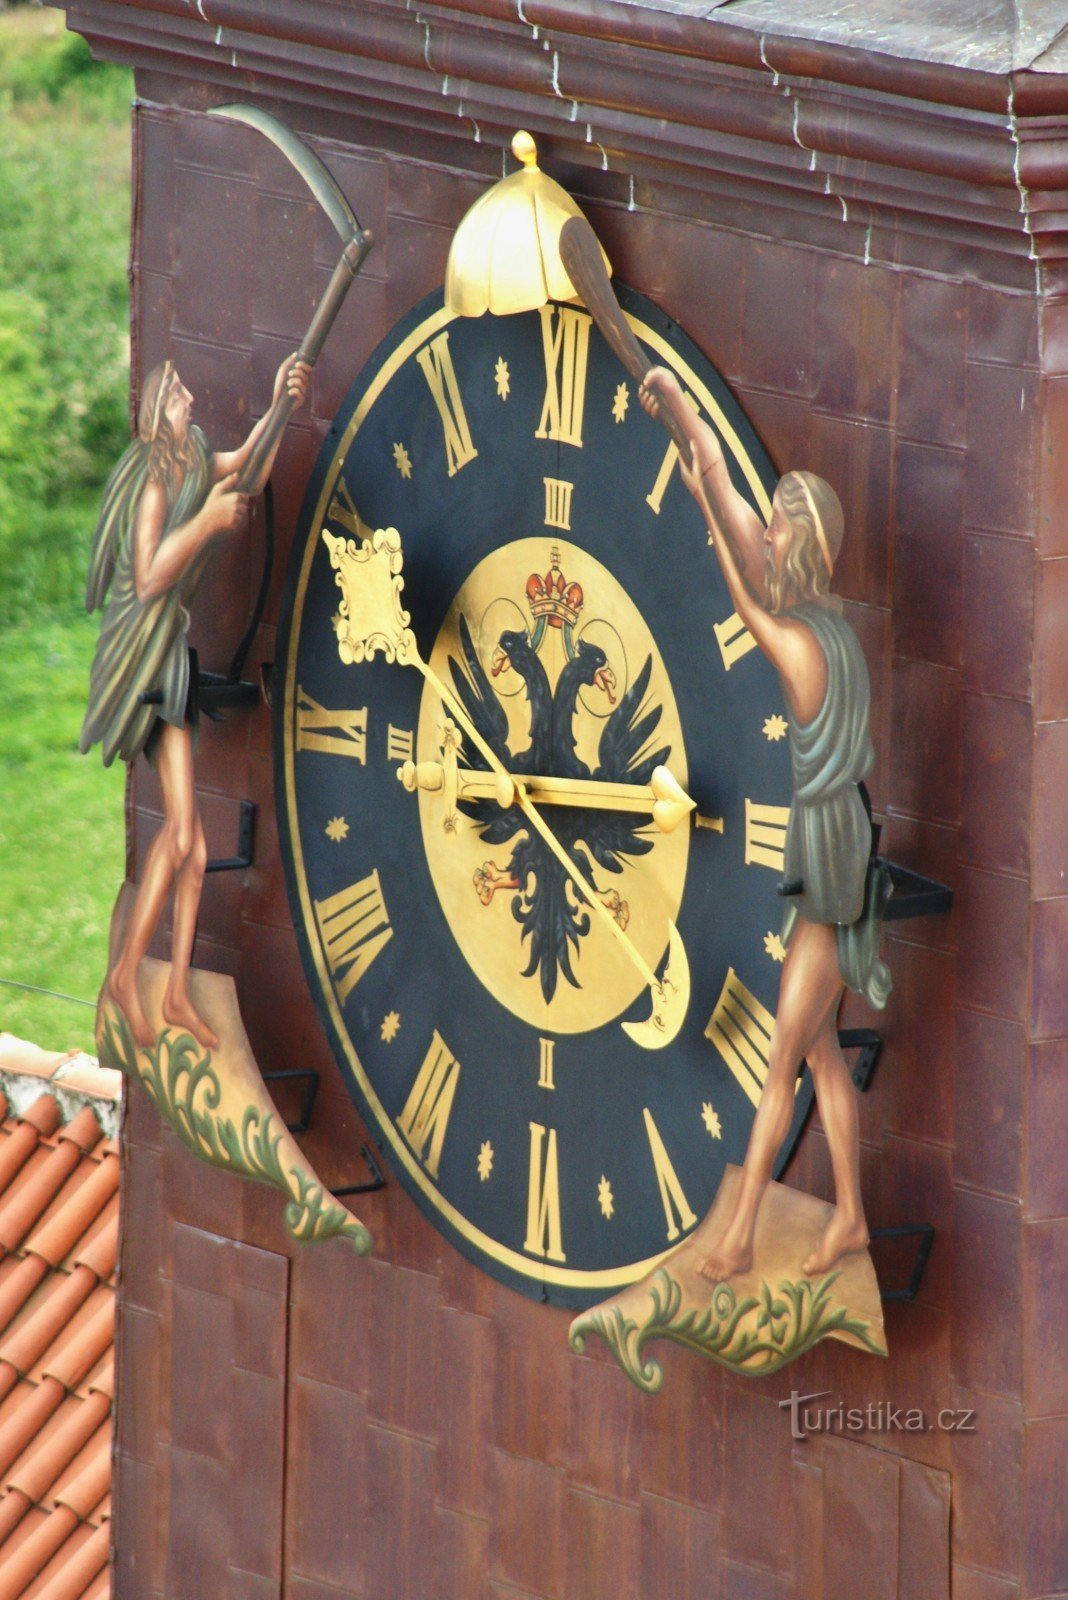 Pelhřim Astronomical Clock